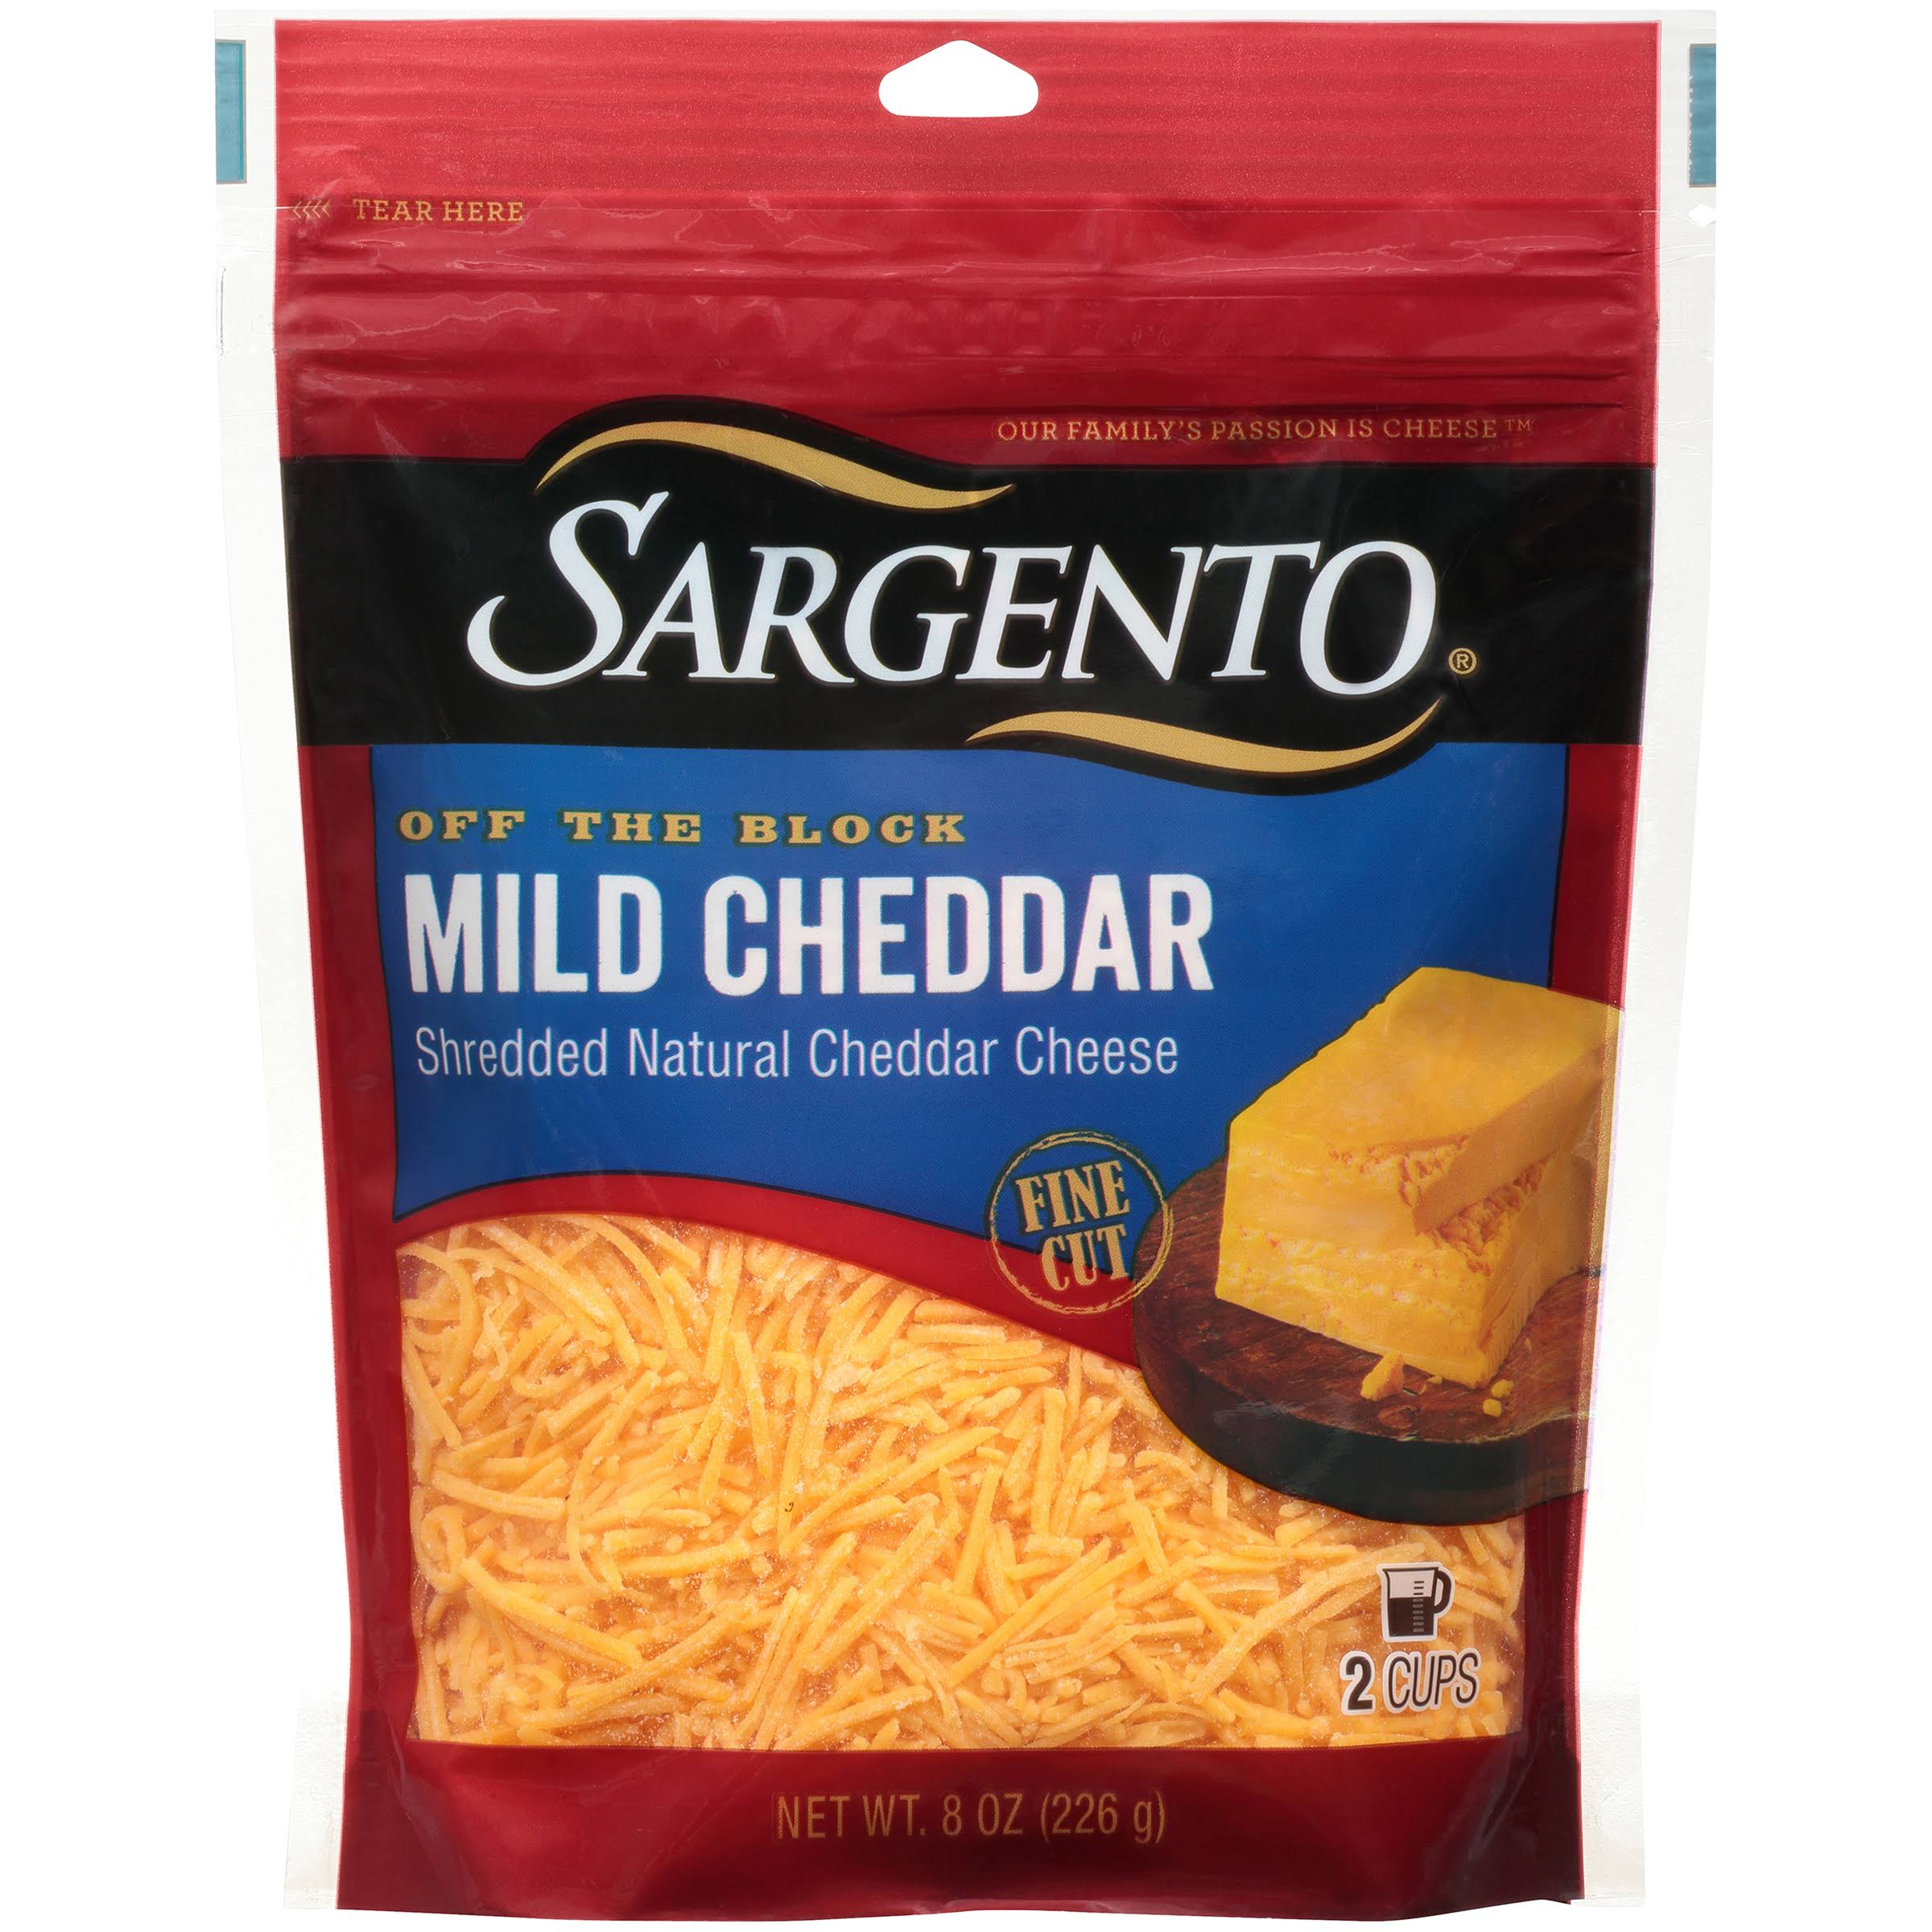 Sargento Off The Block Cheddar Cheese - Mild, Fine Cut, 8oz